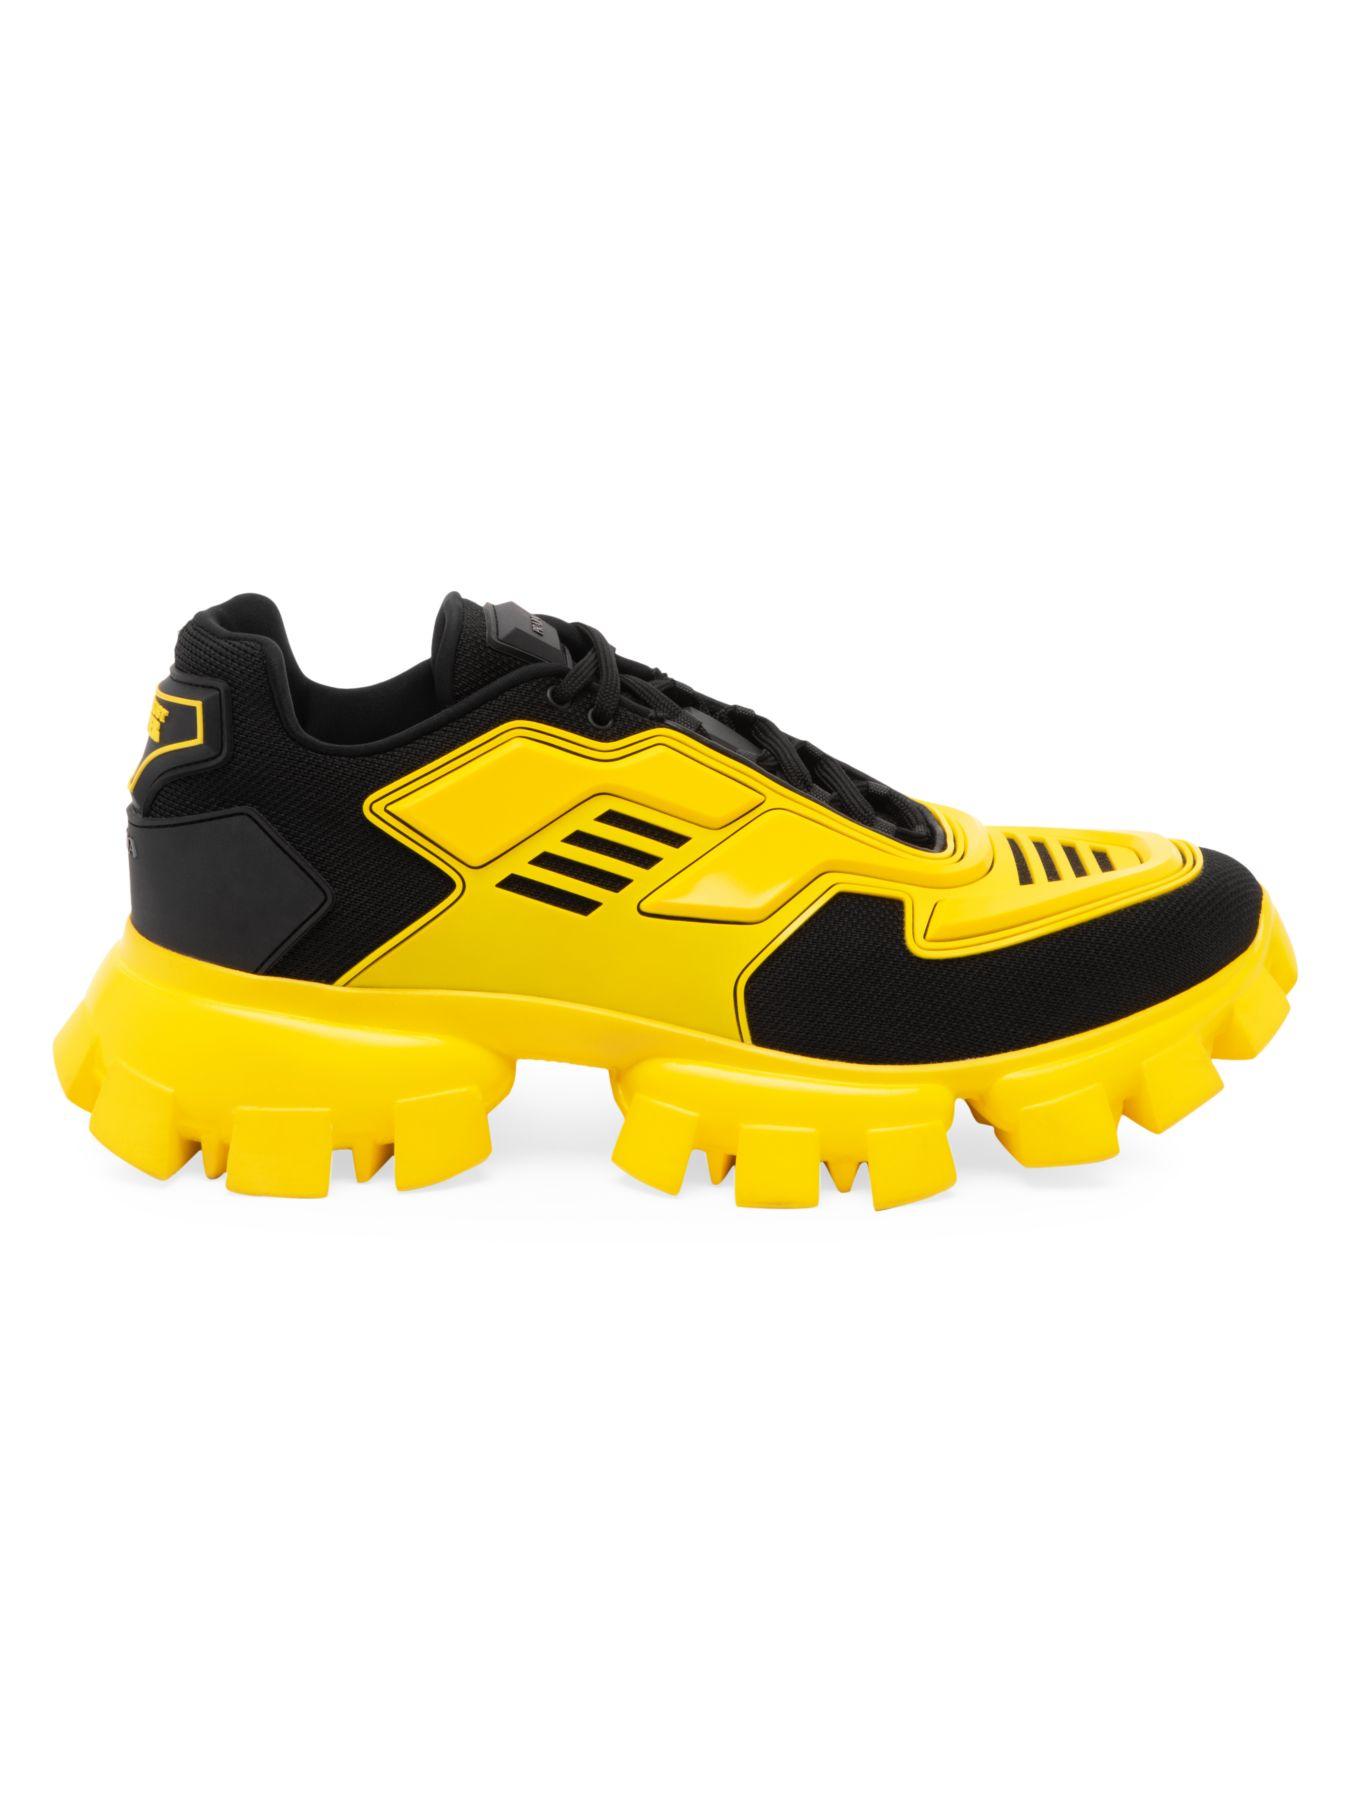 Prada Rubber Cloudbust Thunder Sneakers In Black Yellow Yellow